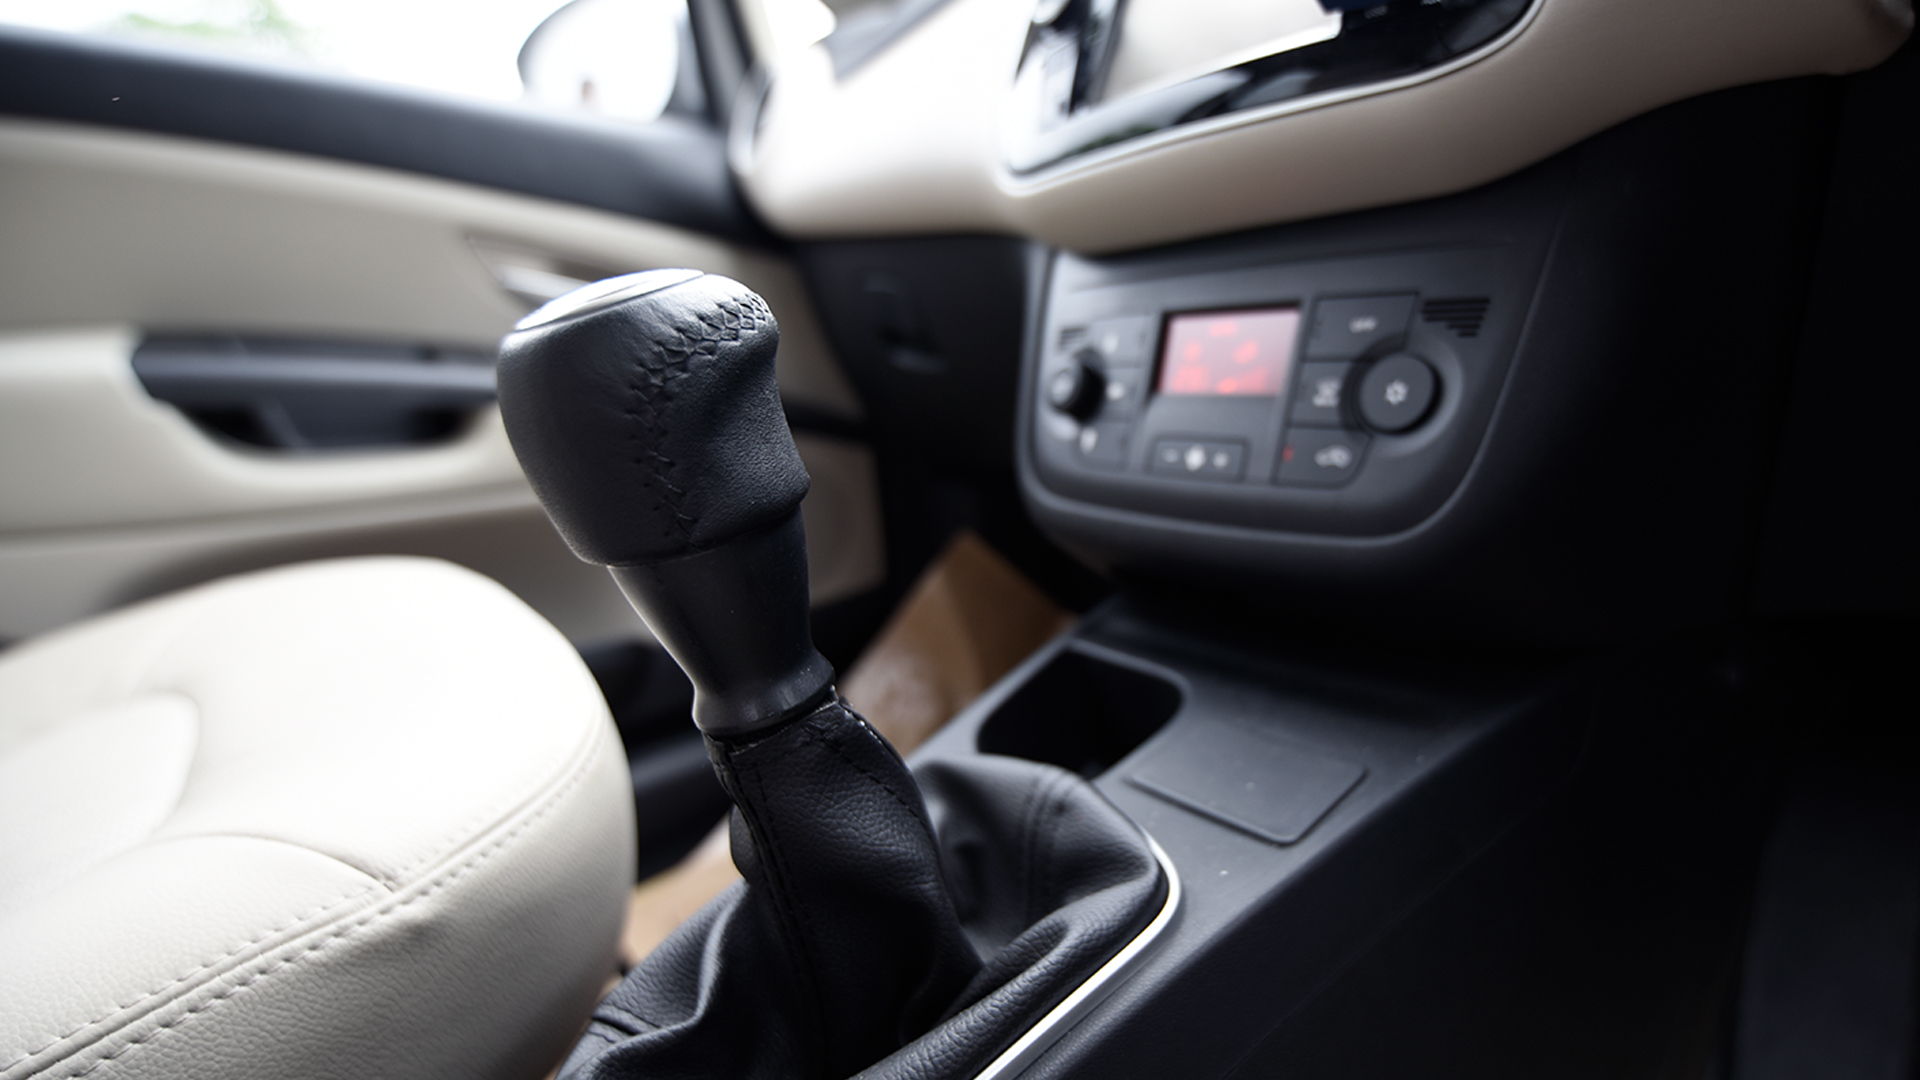 Fiat Linea 125 S 2016 T Jet Emotion Interior Car Photos